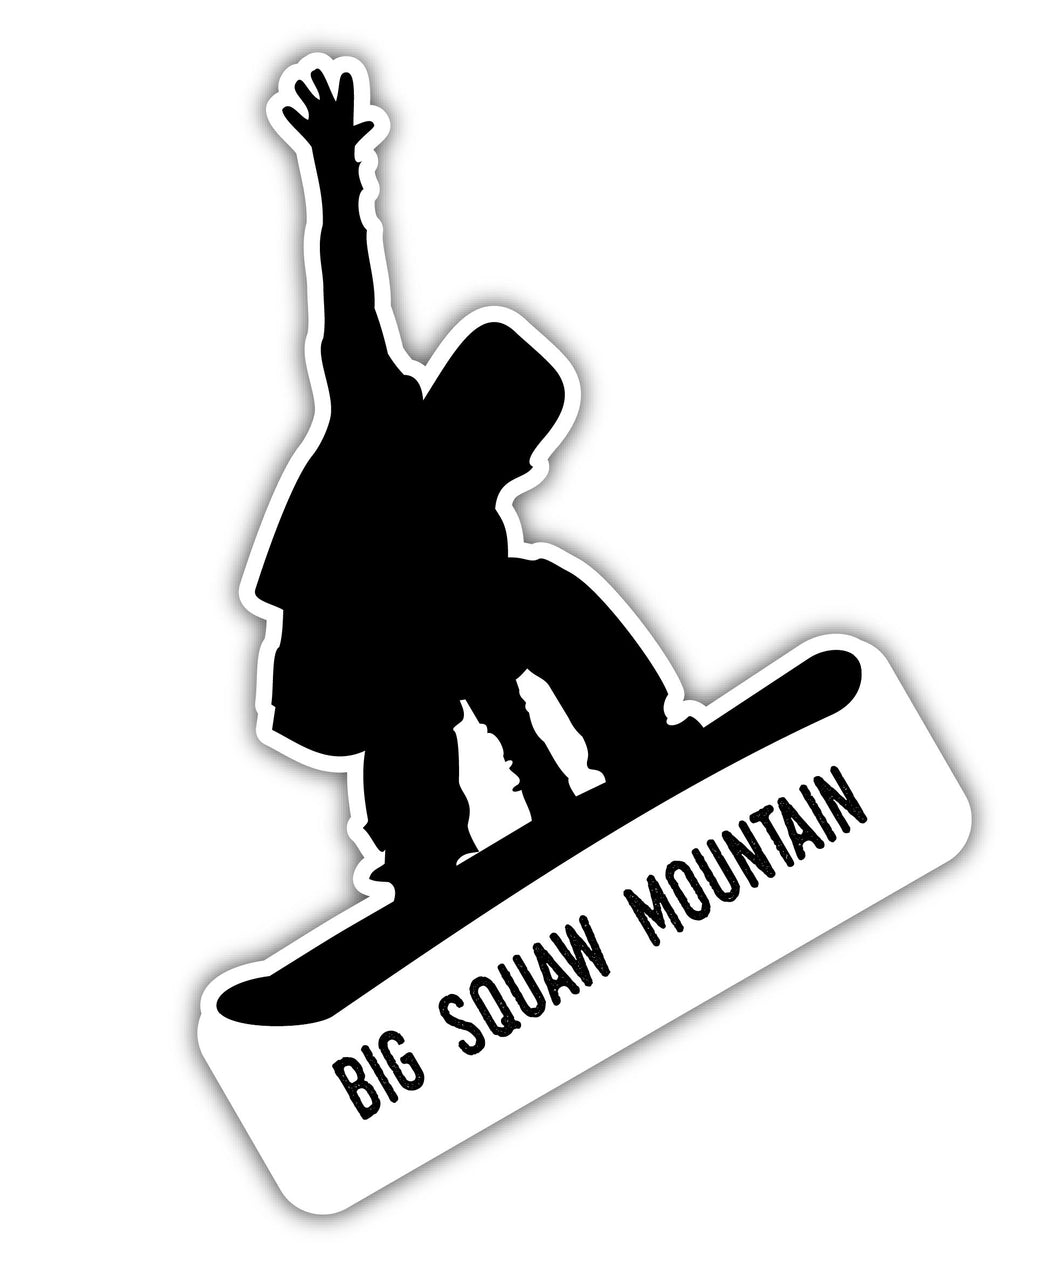 Big Squaw Mountain Maine Ski Adventures Souvenir 4 Inch Vinyl Decal Sticker Board Design